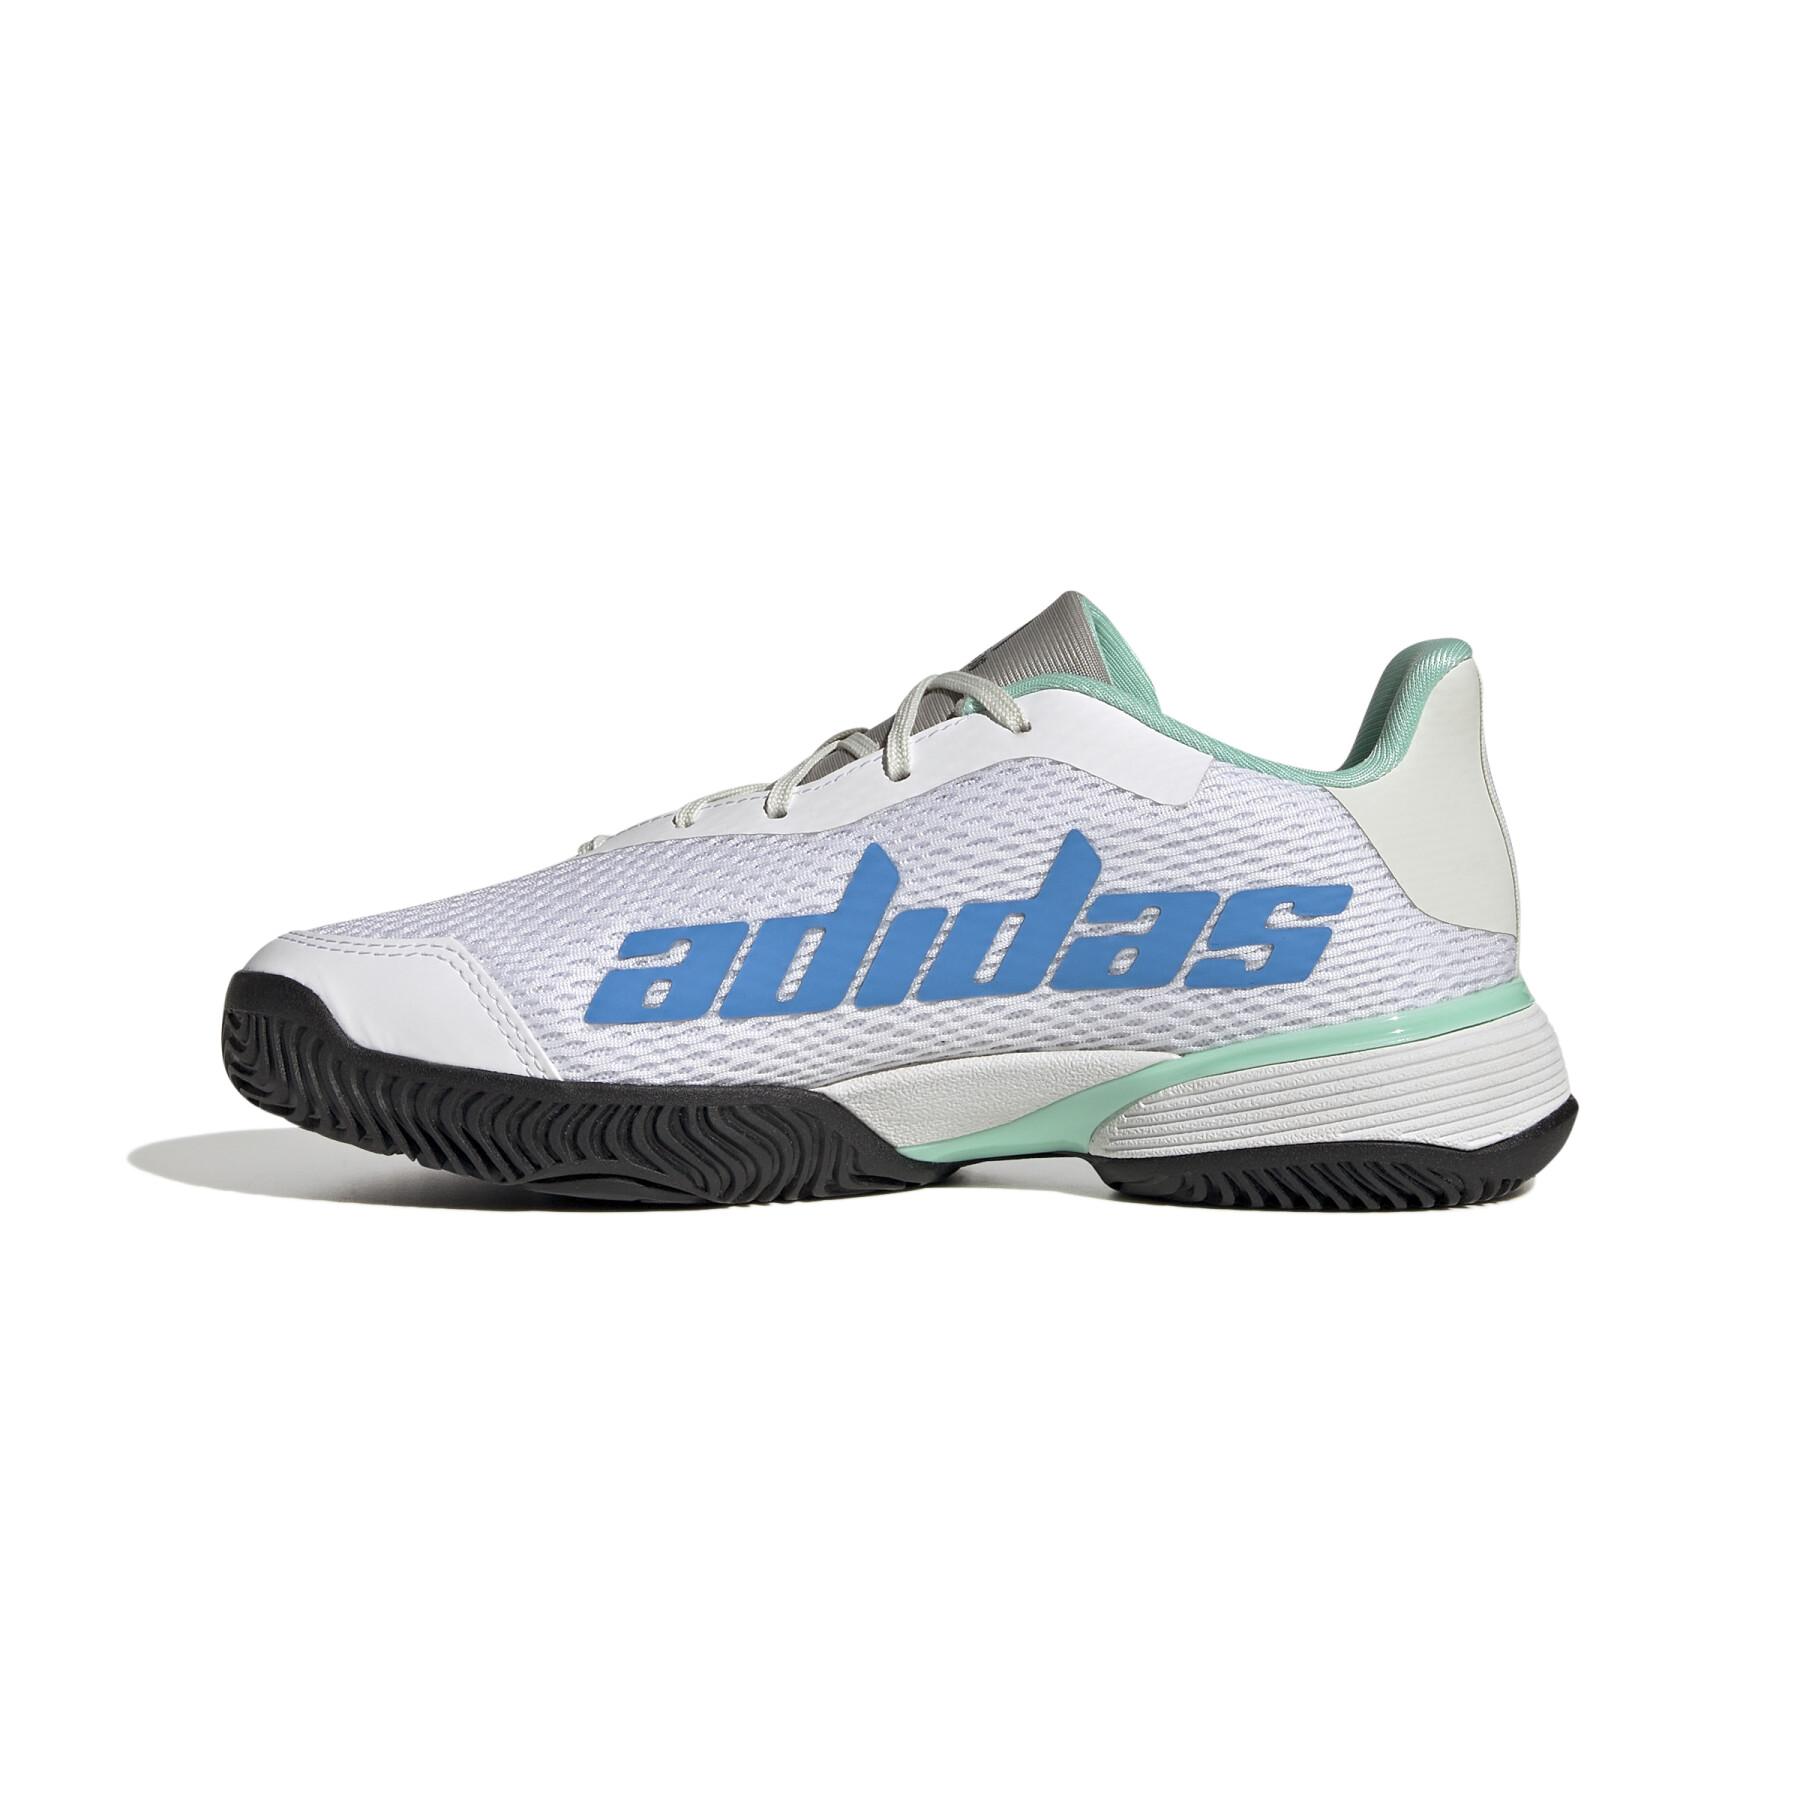 Children's tennis shoes adidas Barricade - adidas - Shoes